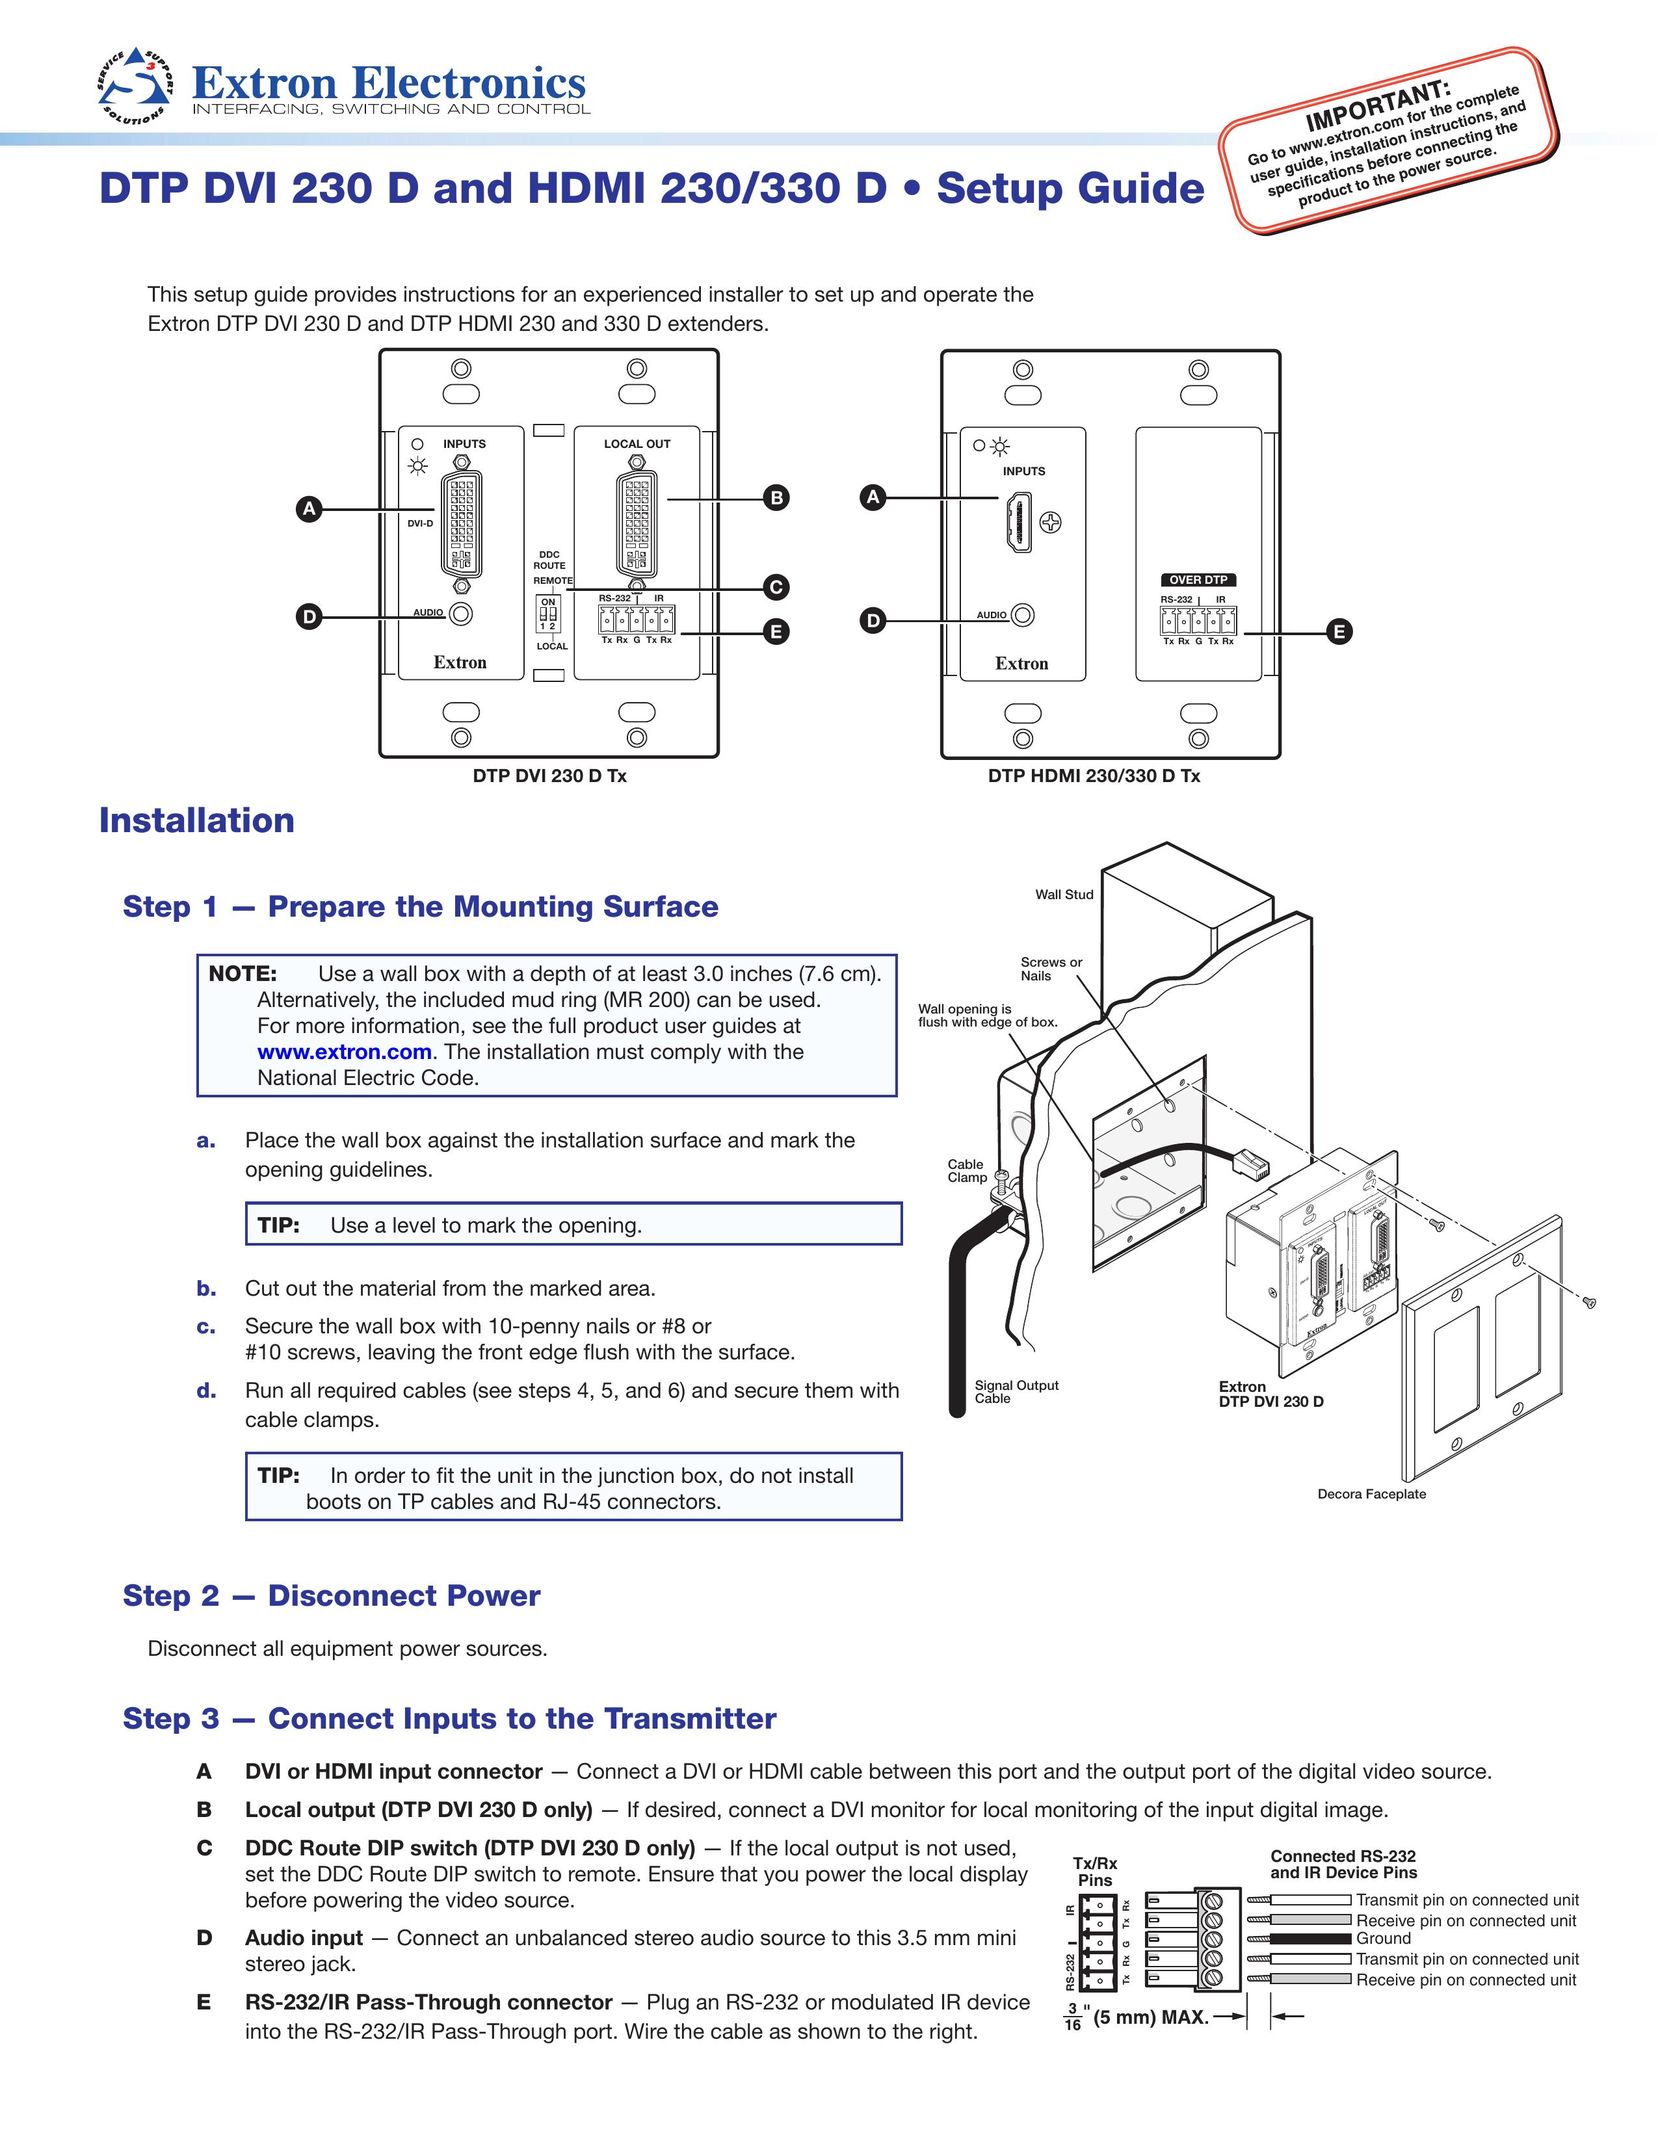 Extron electronic DTP DVI 230 D Computer Accessories User Manual